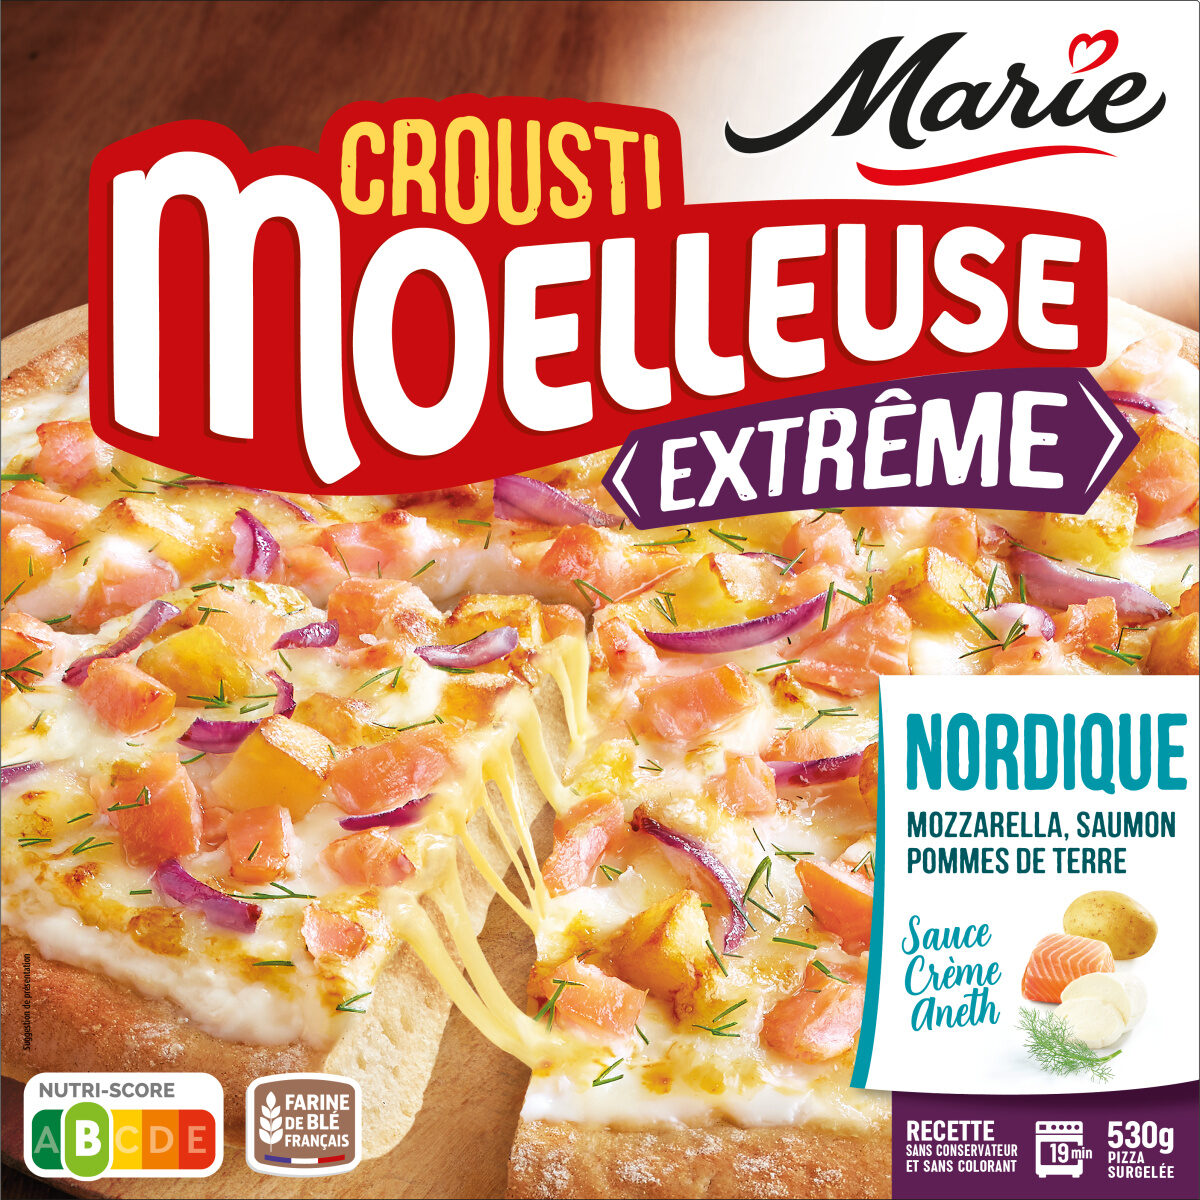 CroustiMoelleuse EXTREME Nordique - Produkt - fr